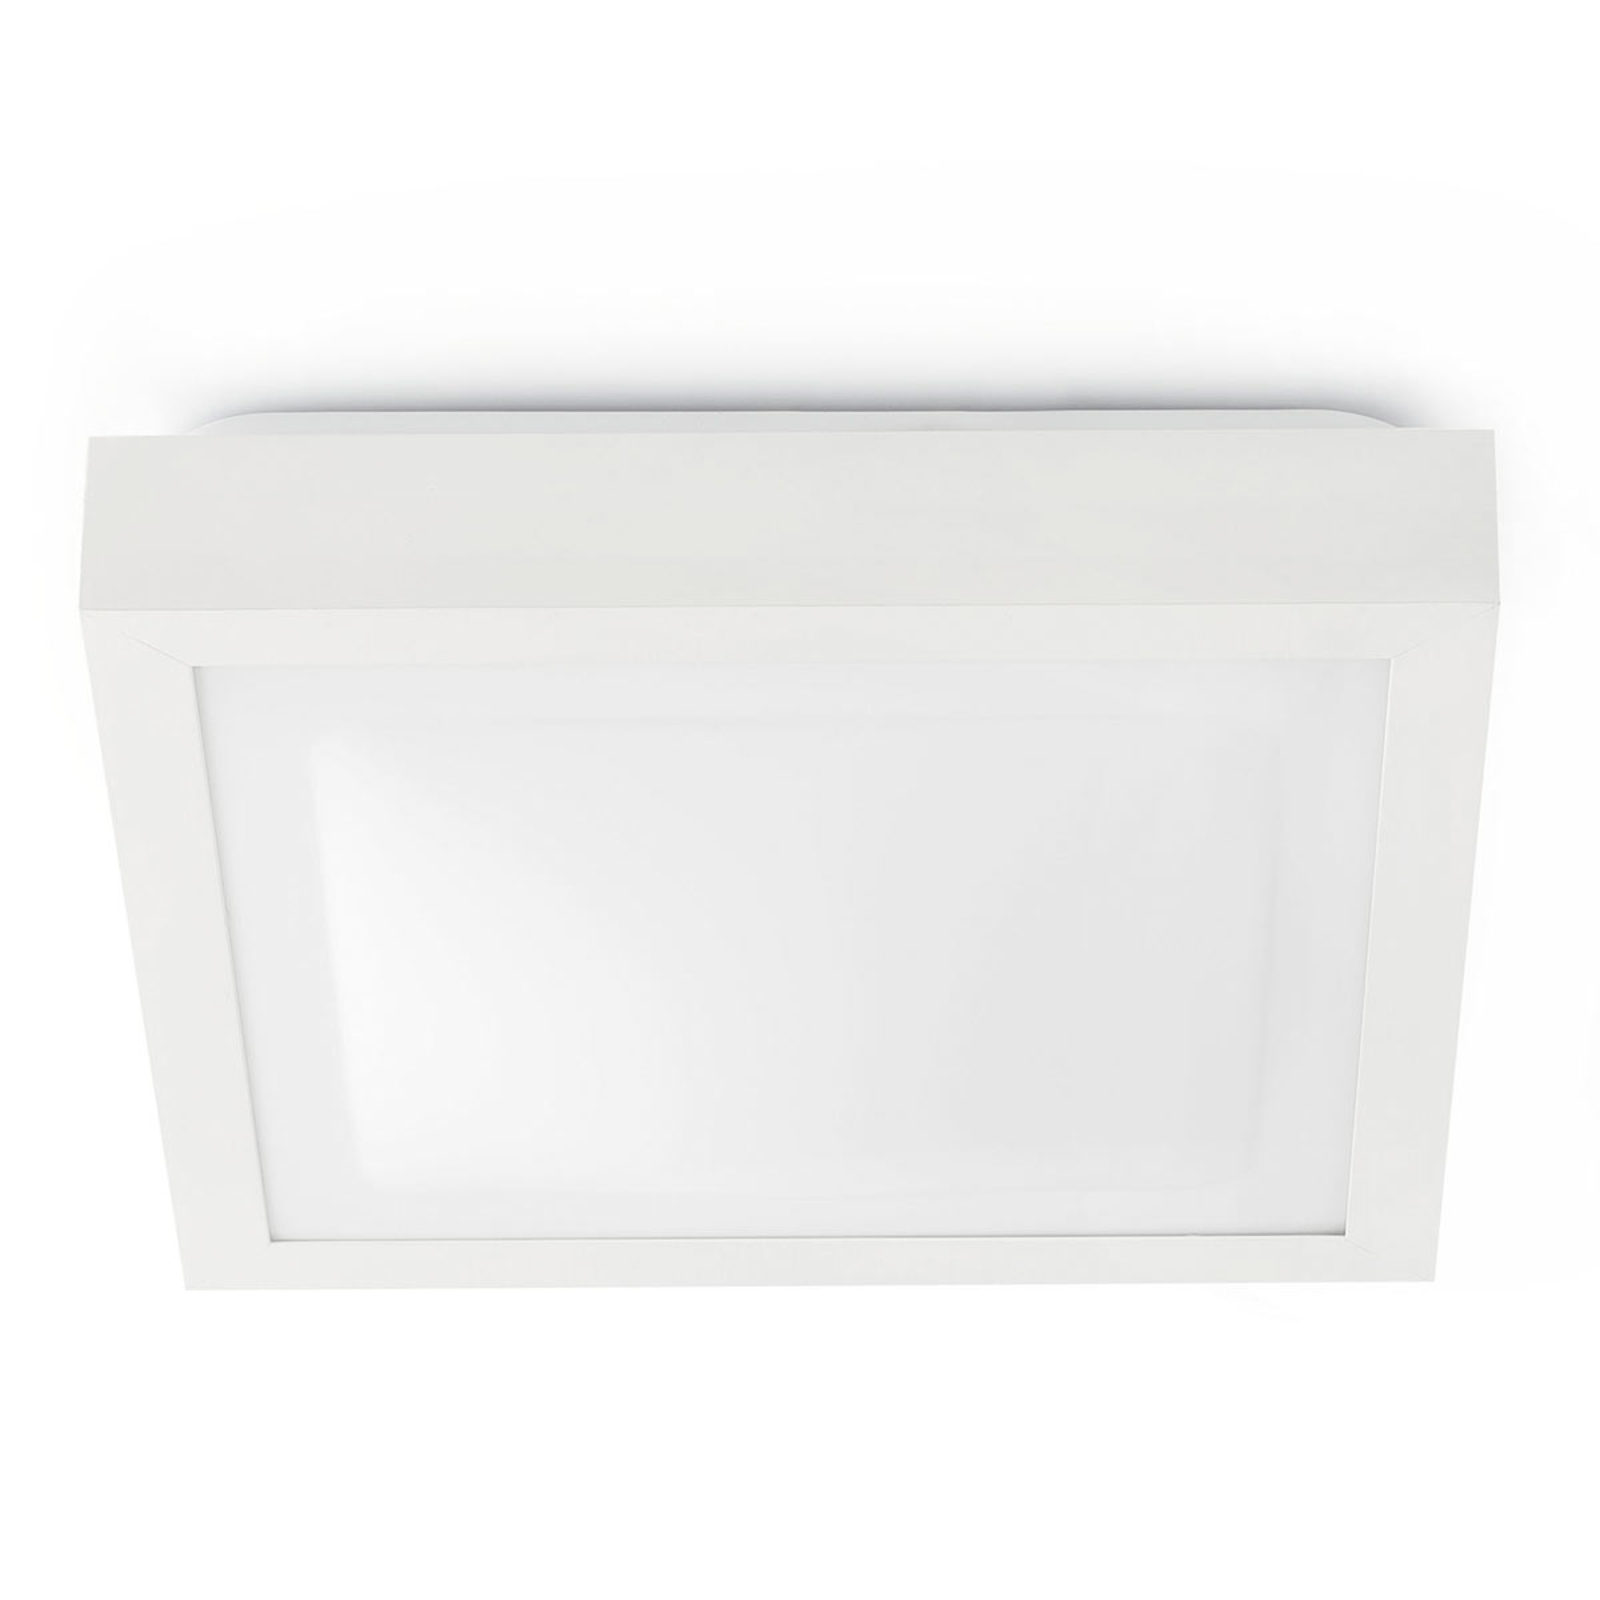 Kúpeľňové stropné svietidlo Tola, 32 x 32 cm biela